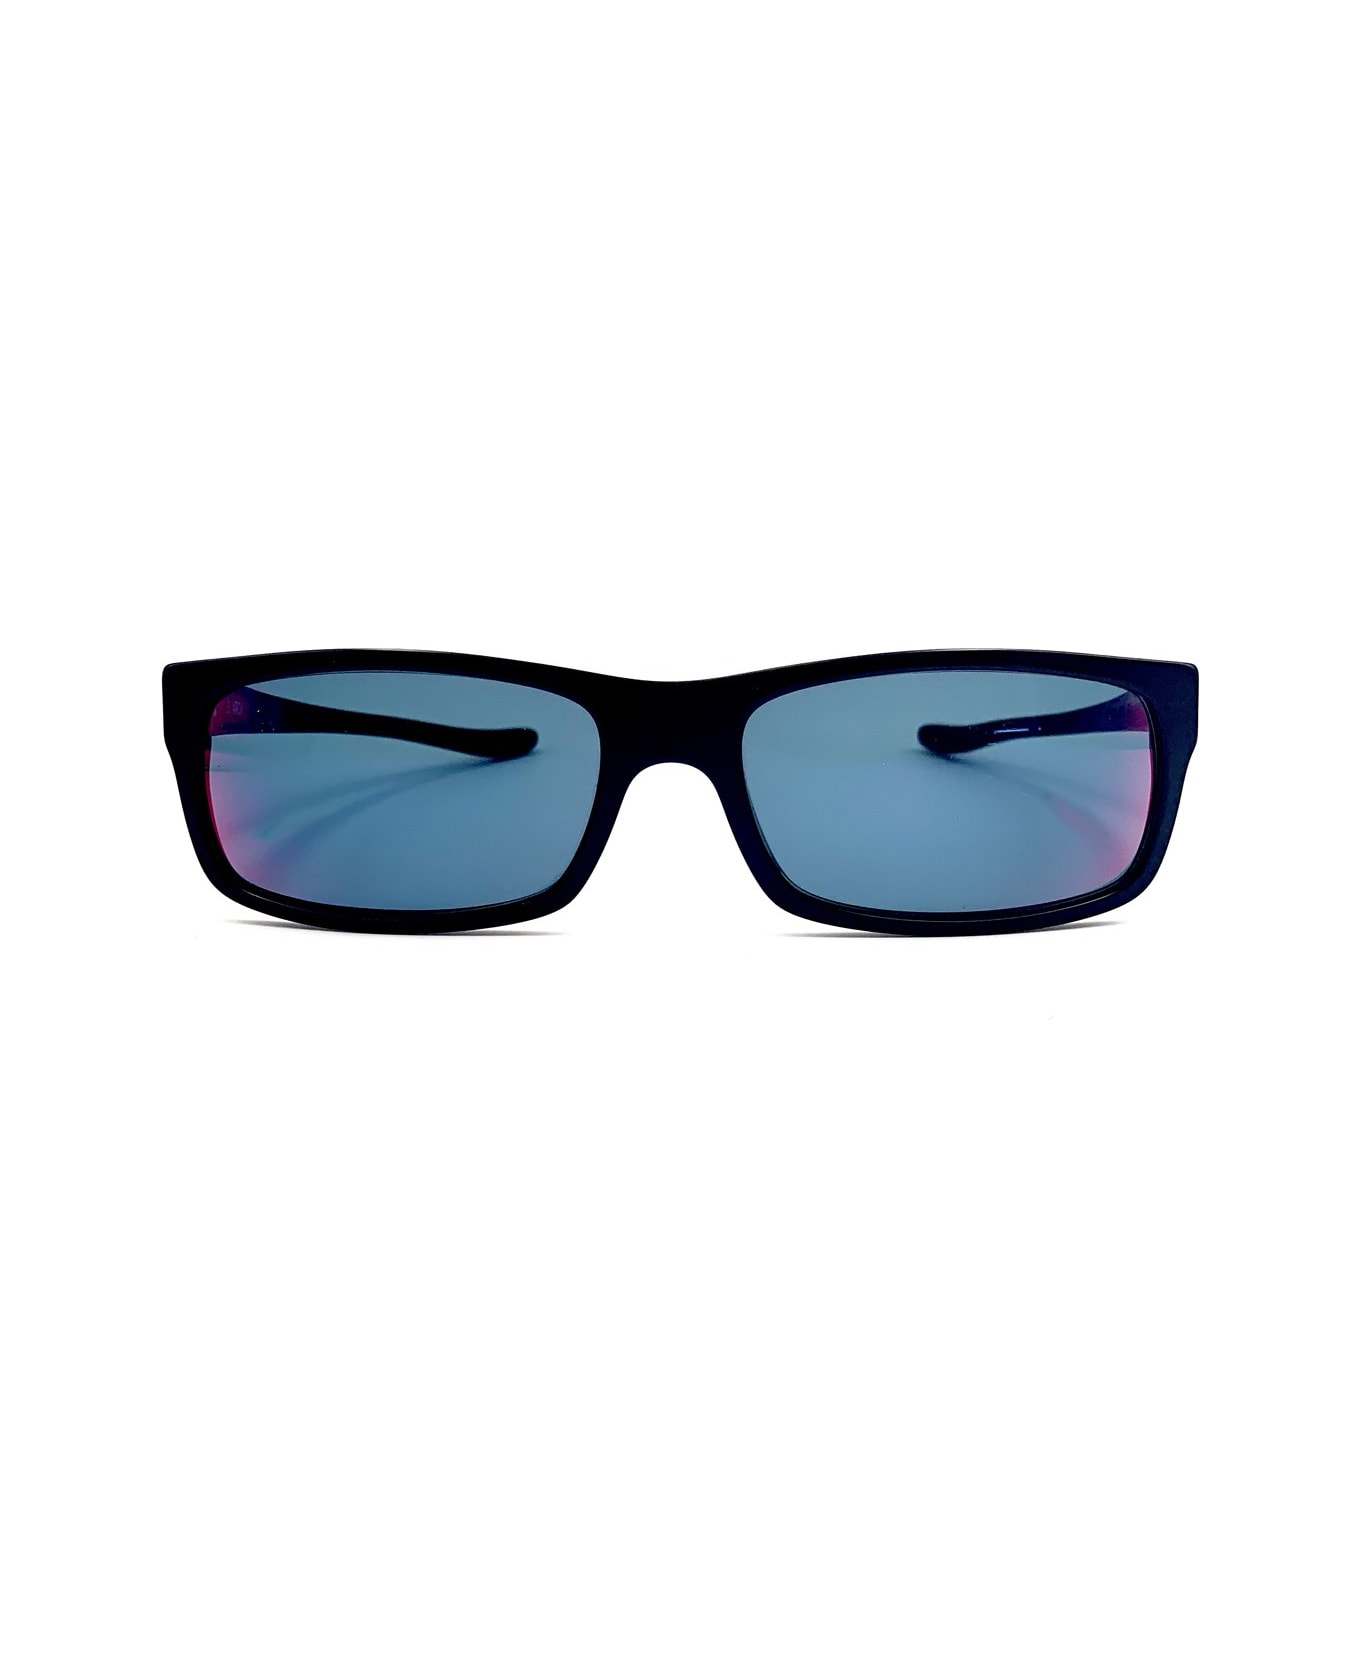 Philippe Starck Pl 1039 Sunglasses - Nero サングラス